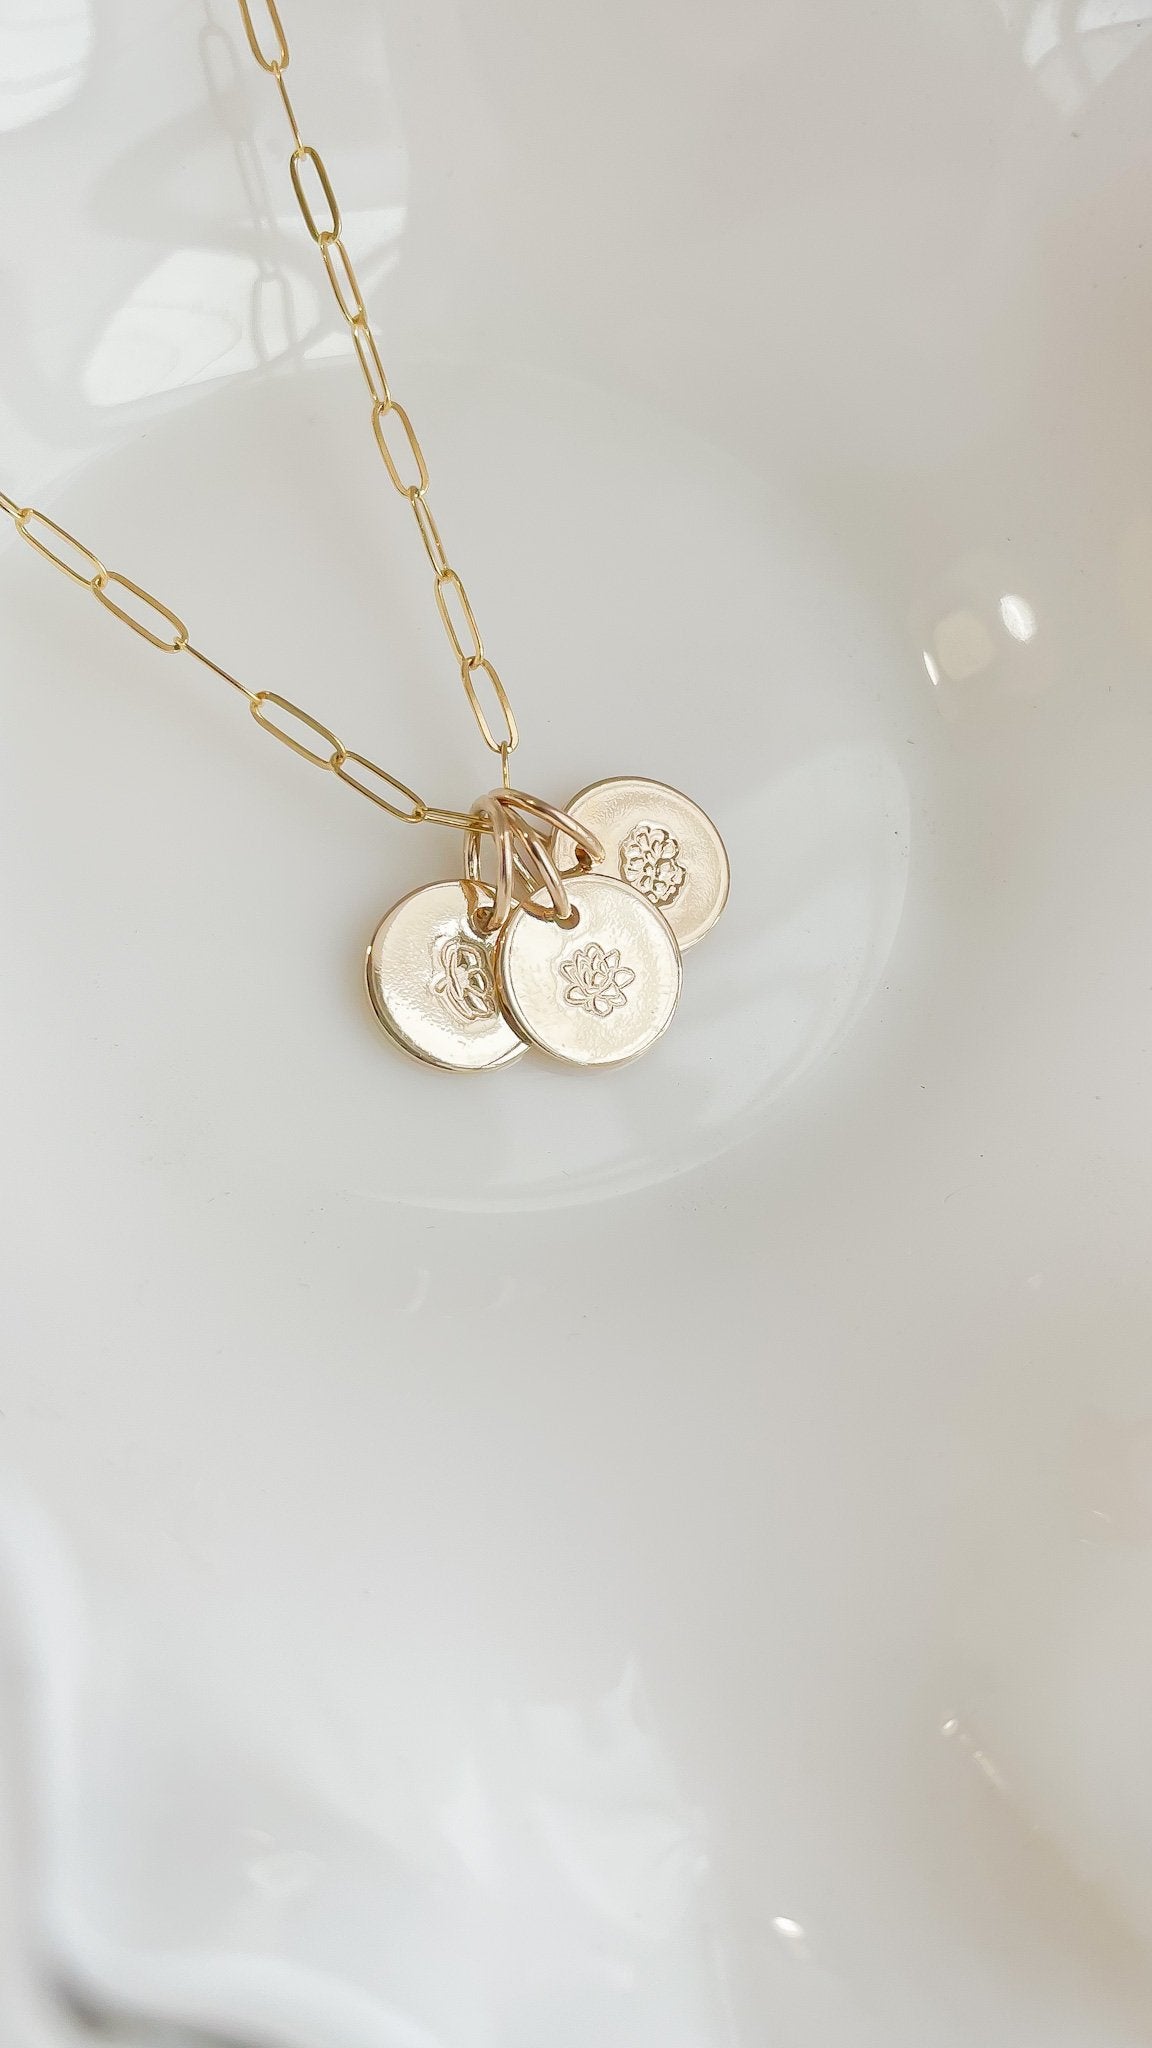 SUN & SELENE birth flower coin necklace 